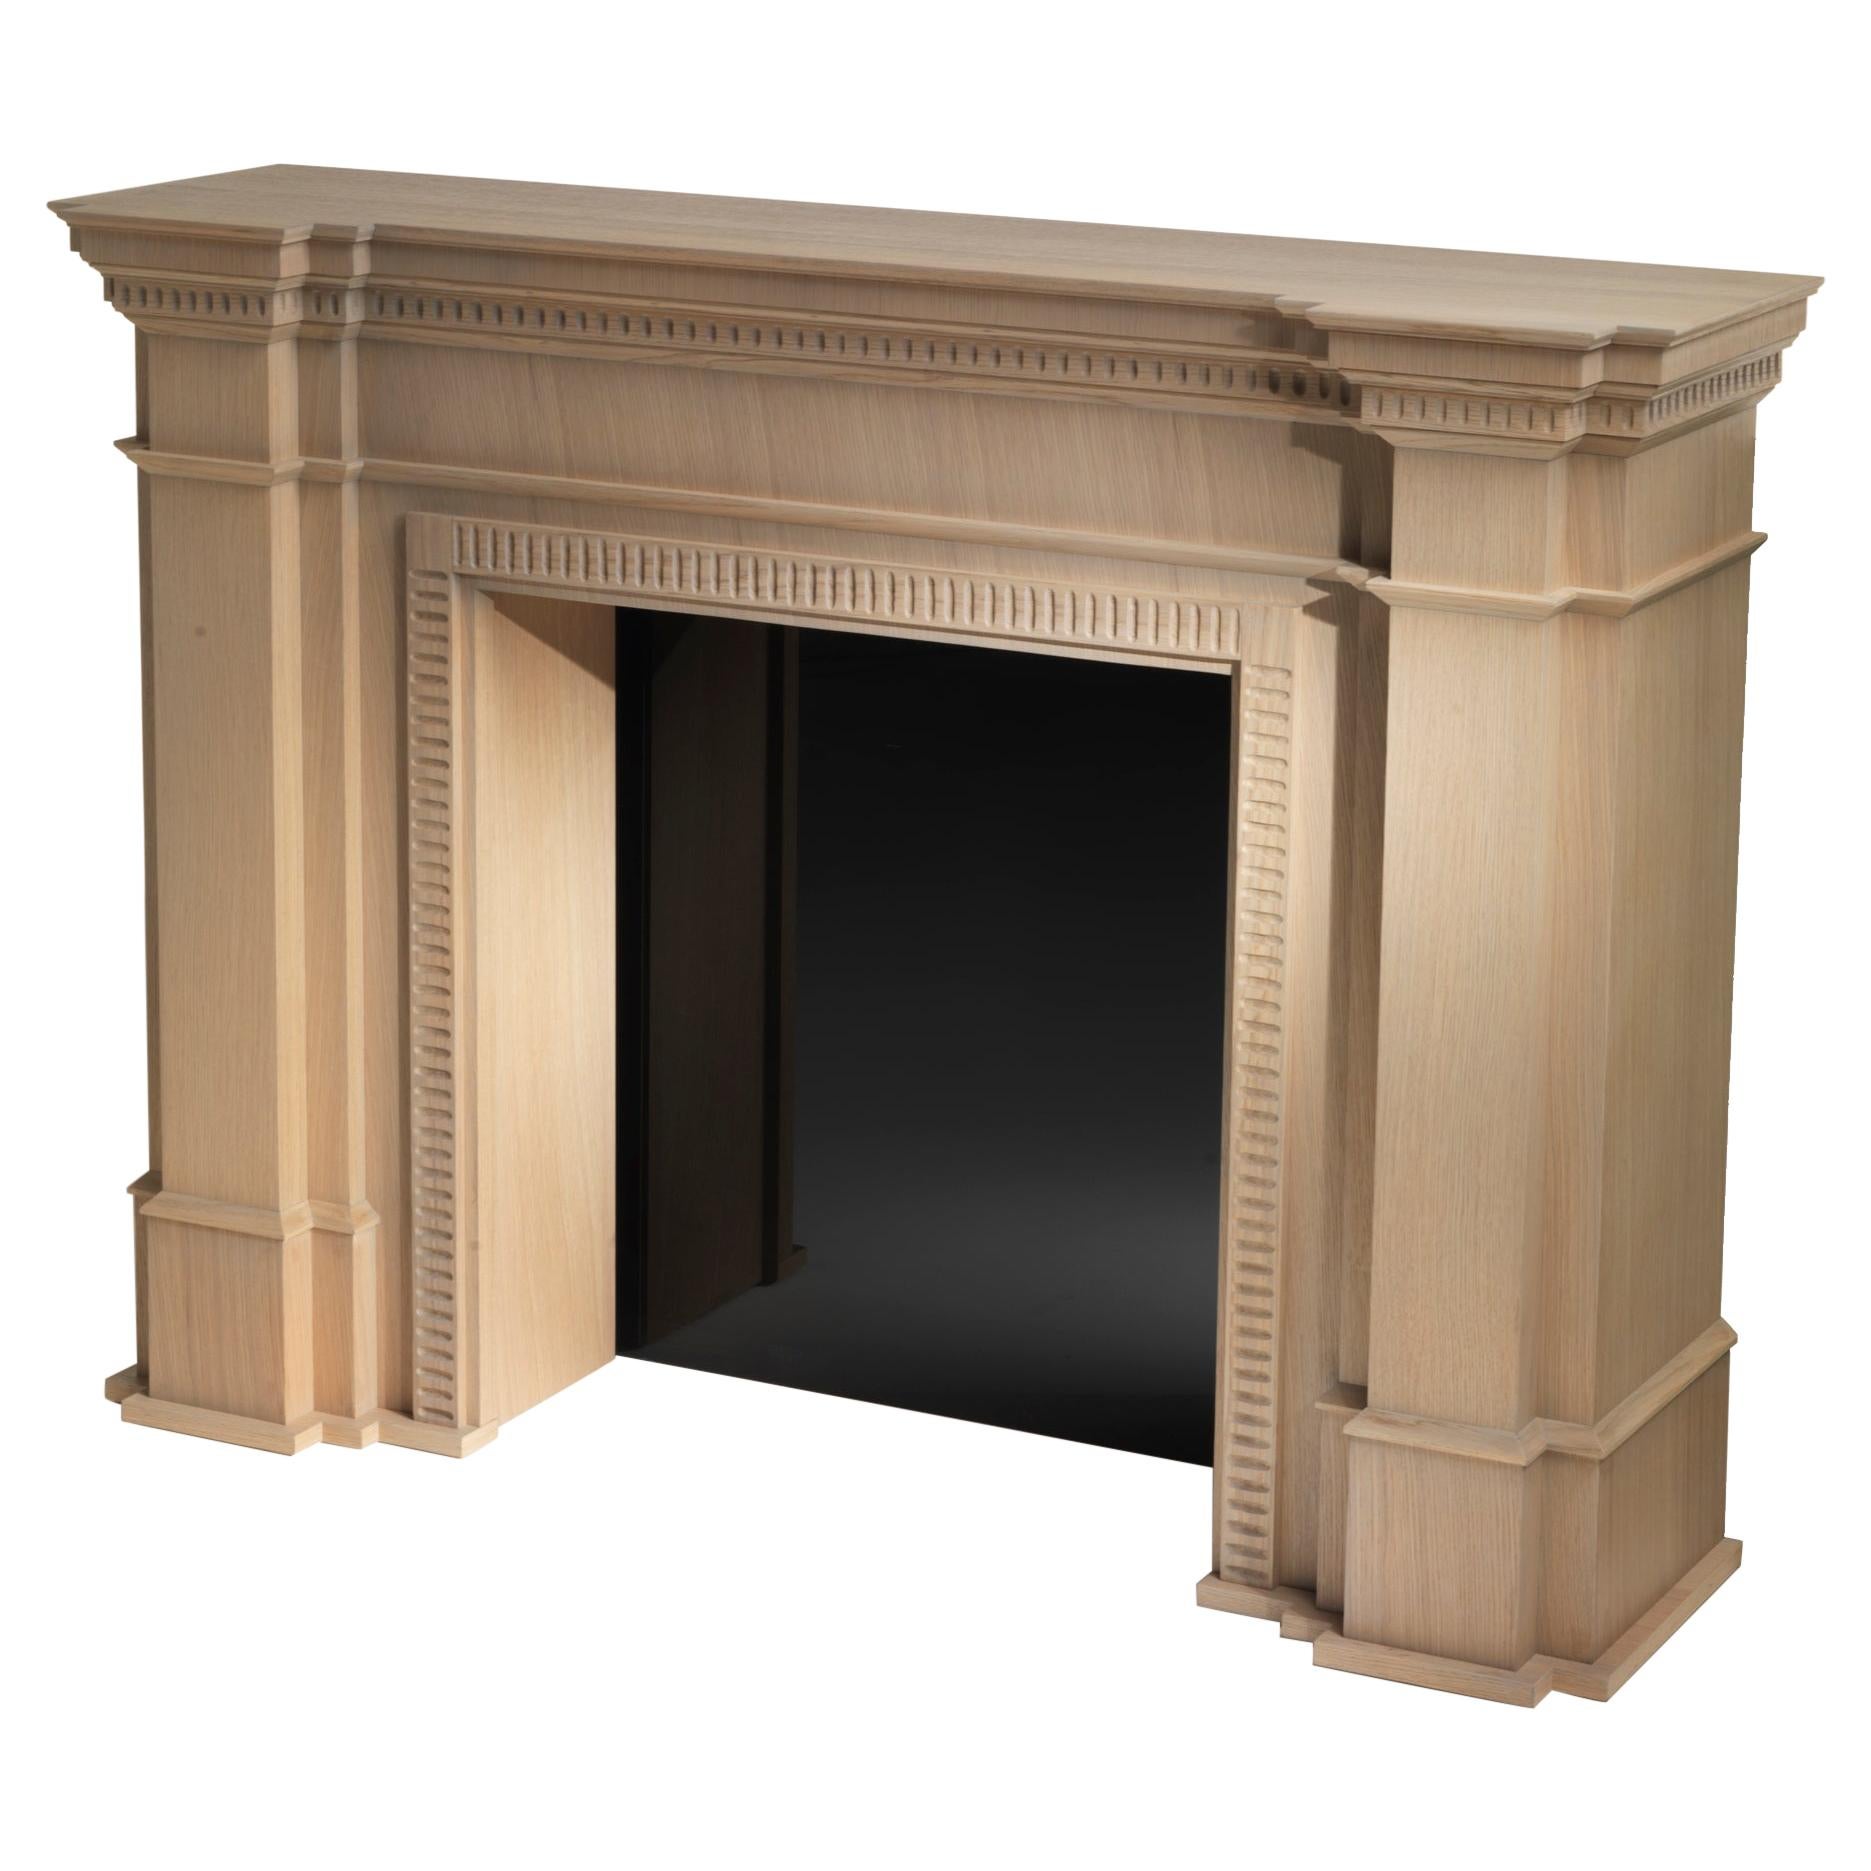 KEDDLESTON ANTIK Wooden Fireplace with Mirror Back in Solid Oak by Piero Manara For Sale